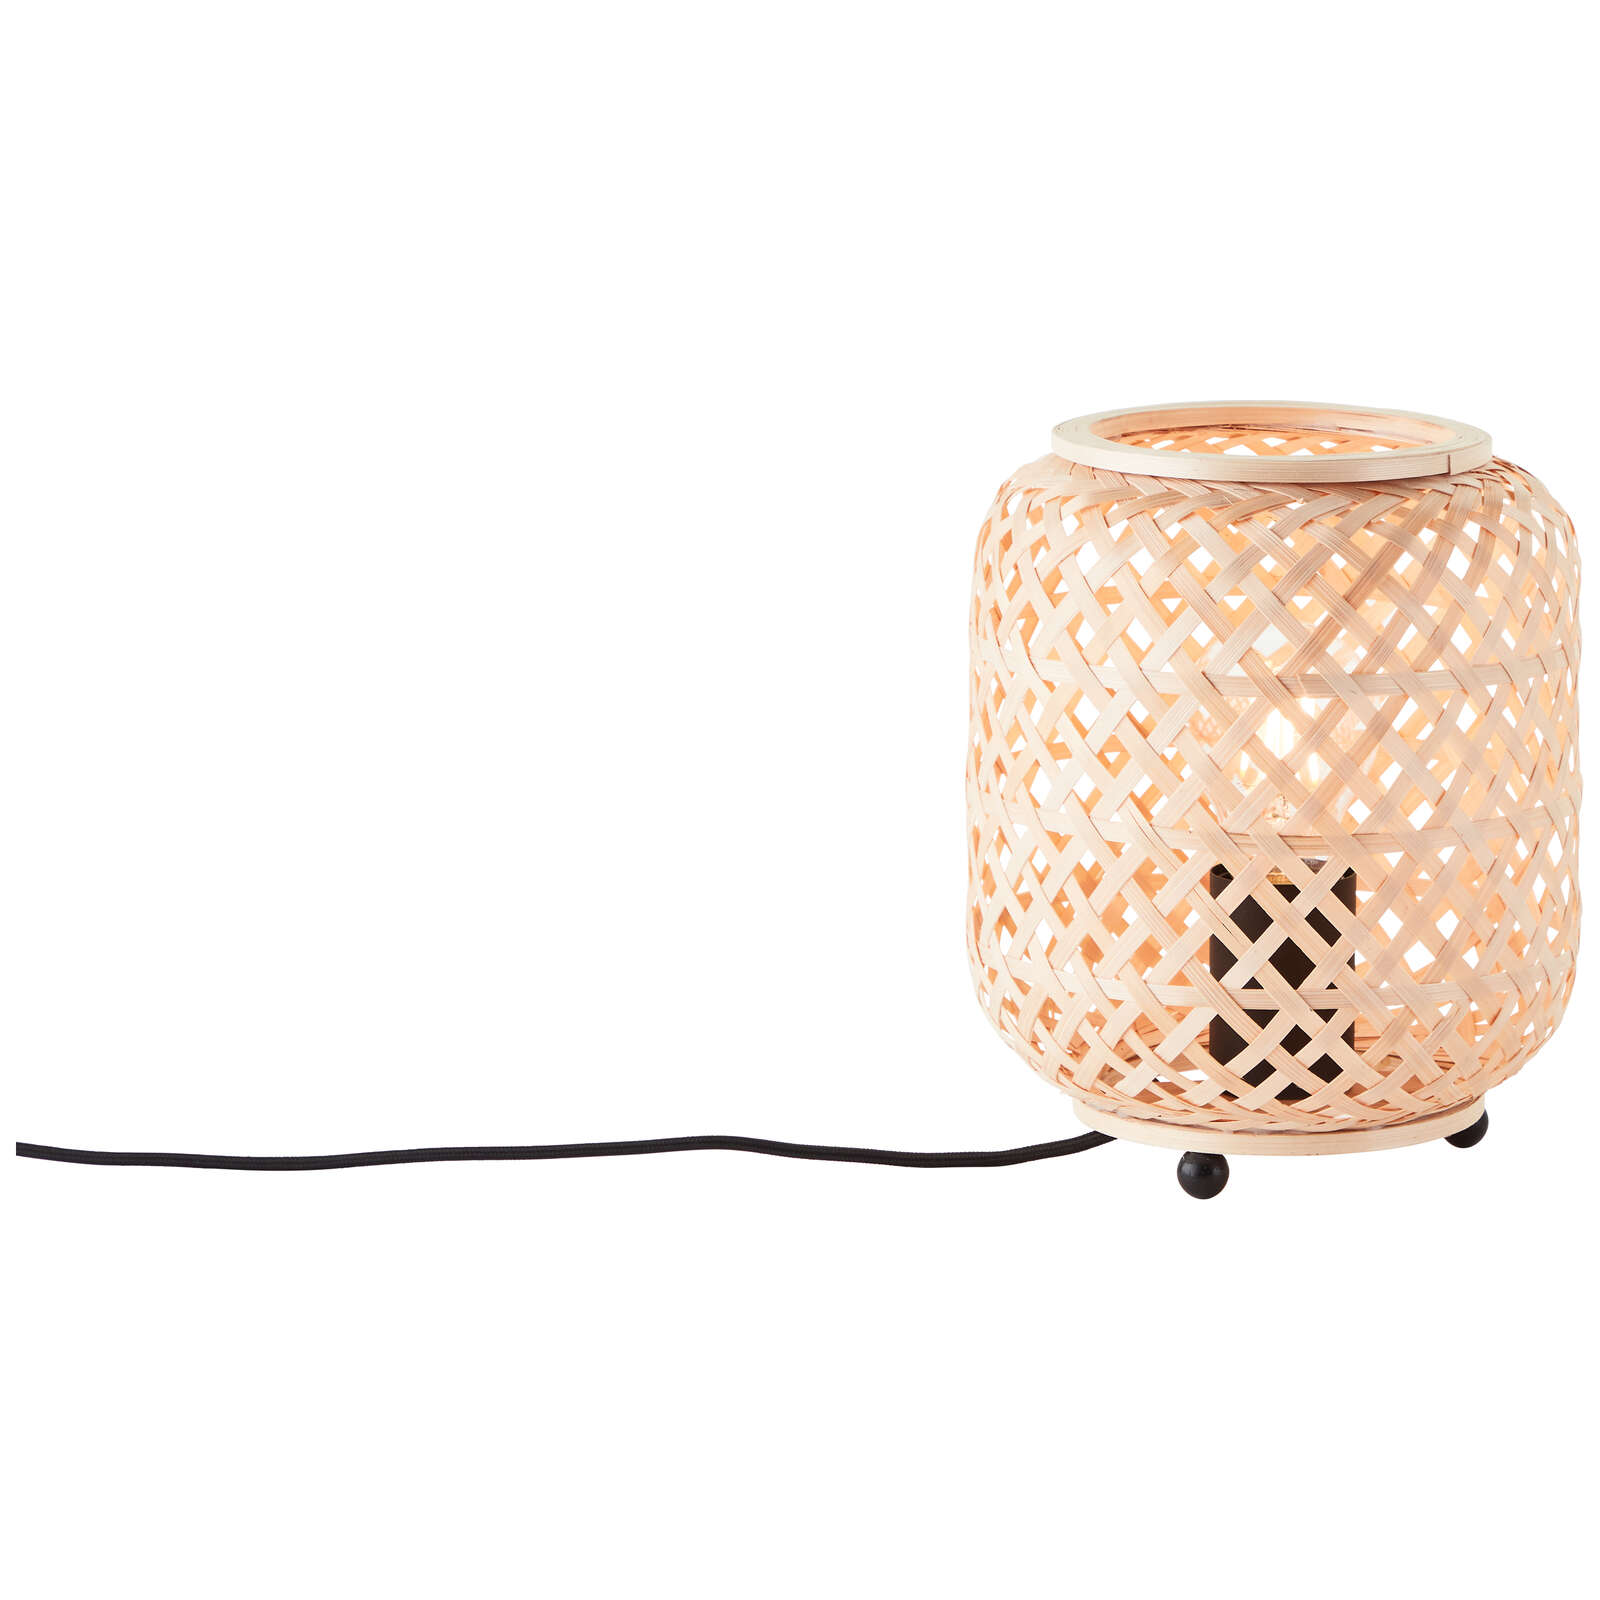             Bamboe tafellamp - Lina - Bruin
        